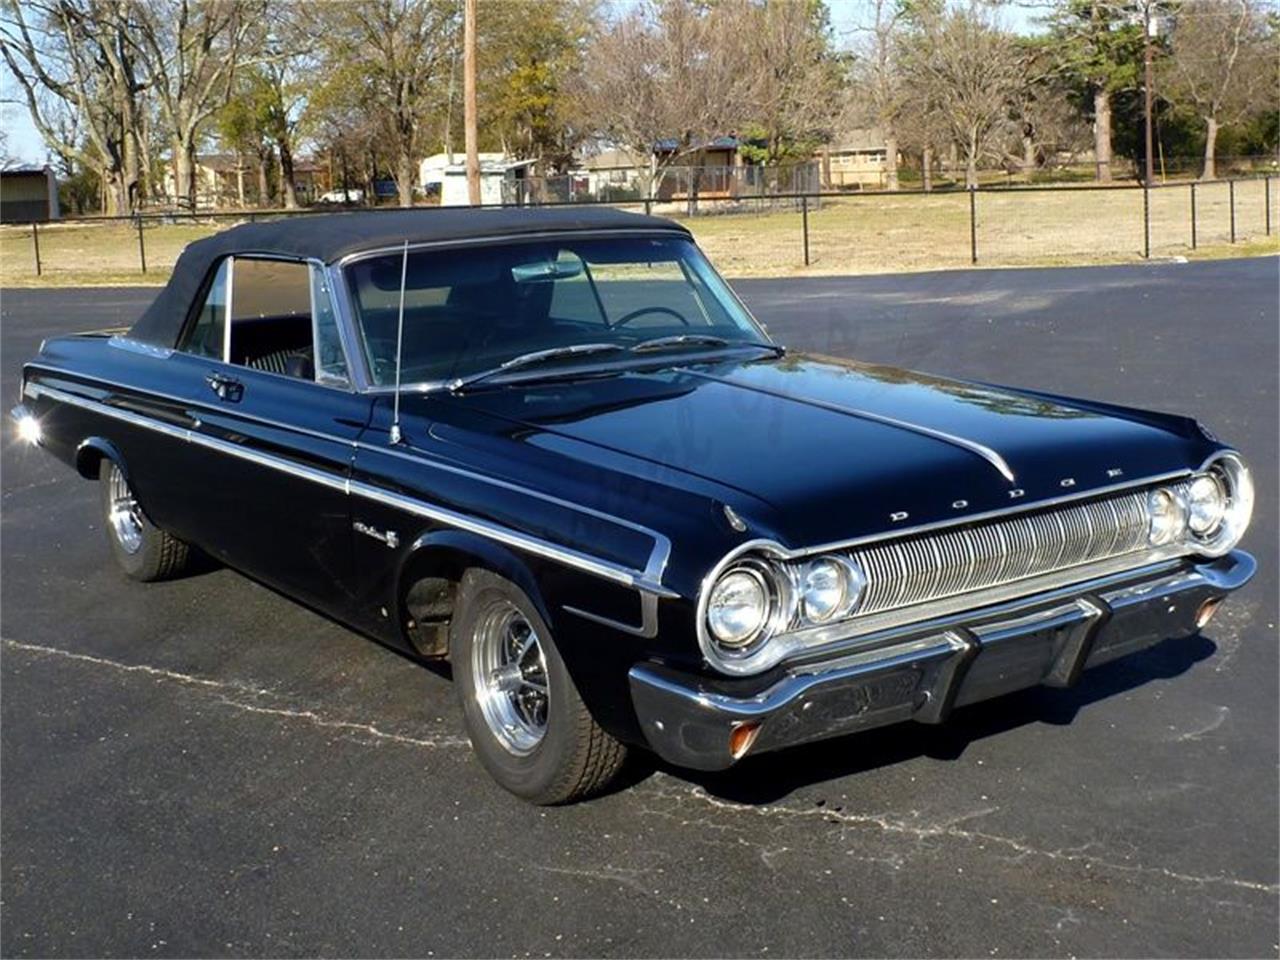 For Sale: 1964 Dodge Polara in Arlington, Texas for sale in Arlington, TX